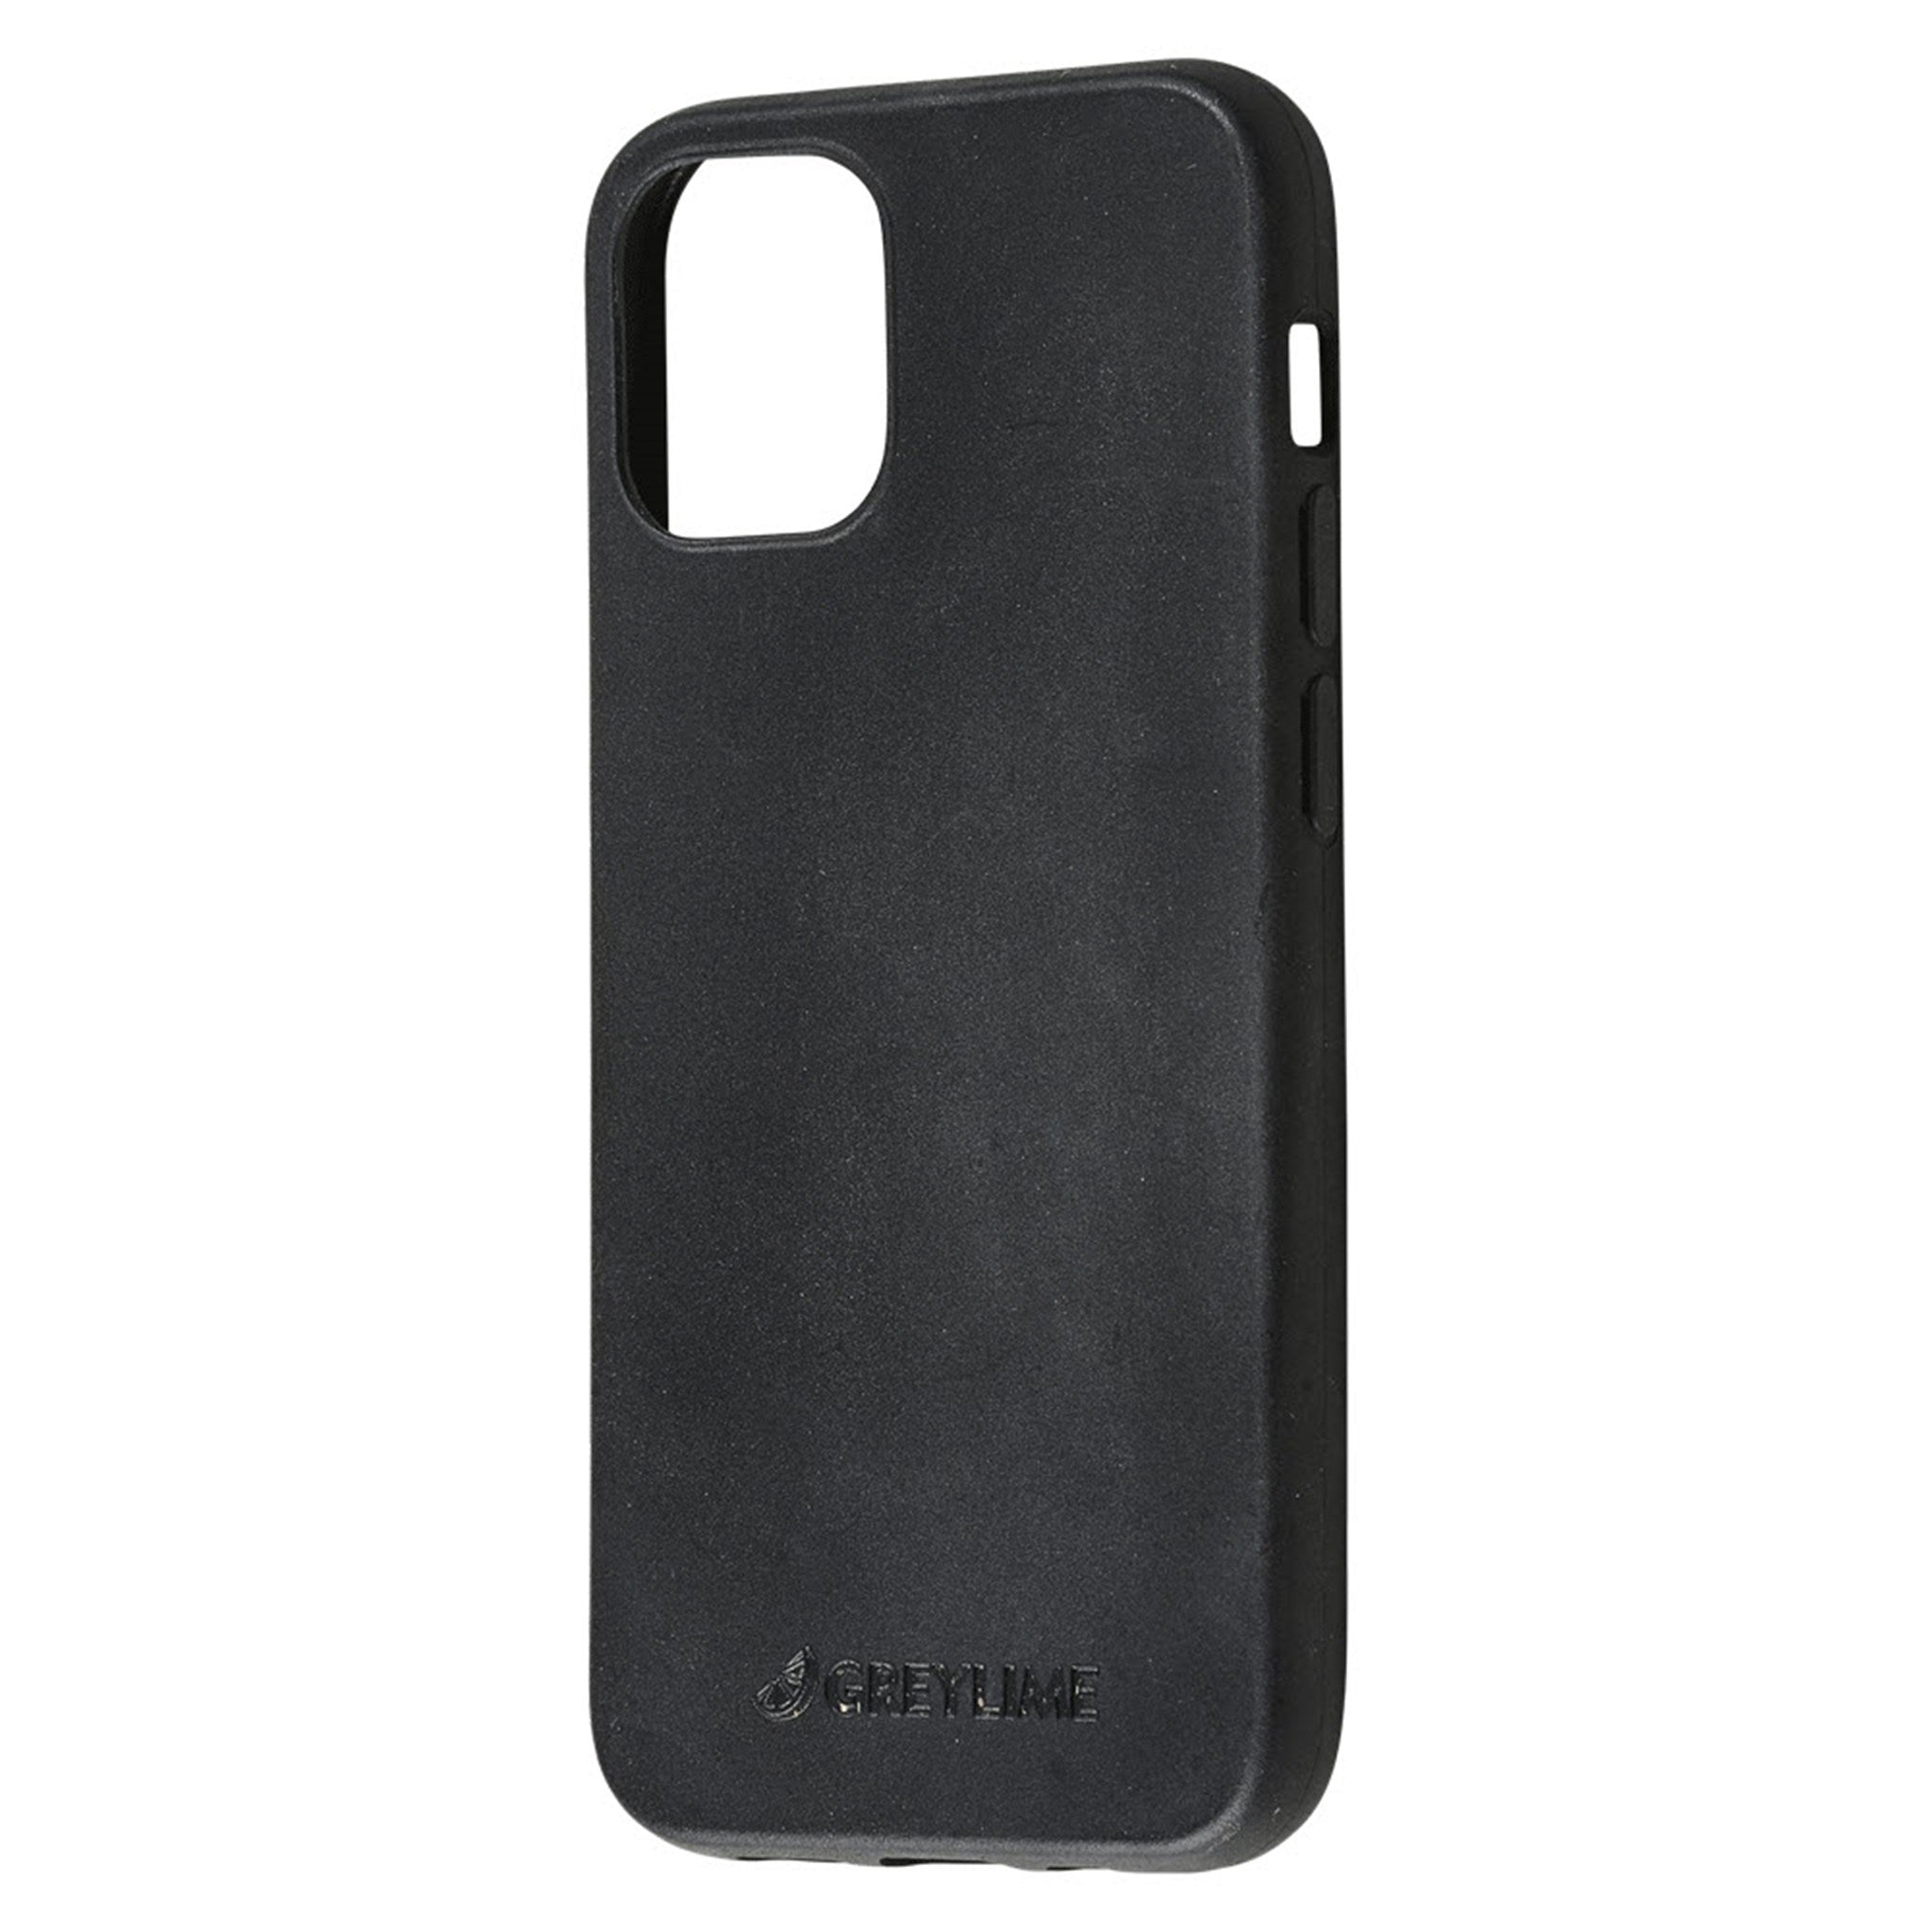 GreyLime-iPhone-12-Mini-Biodegdrable-Cover-Black-COIP12S01-V2.jpg